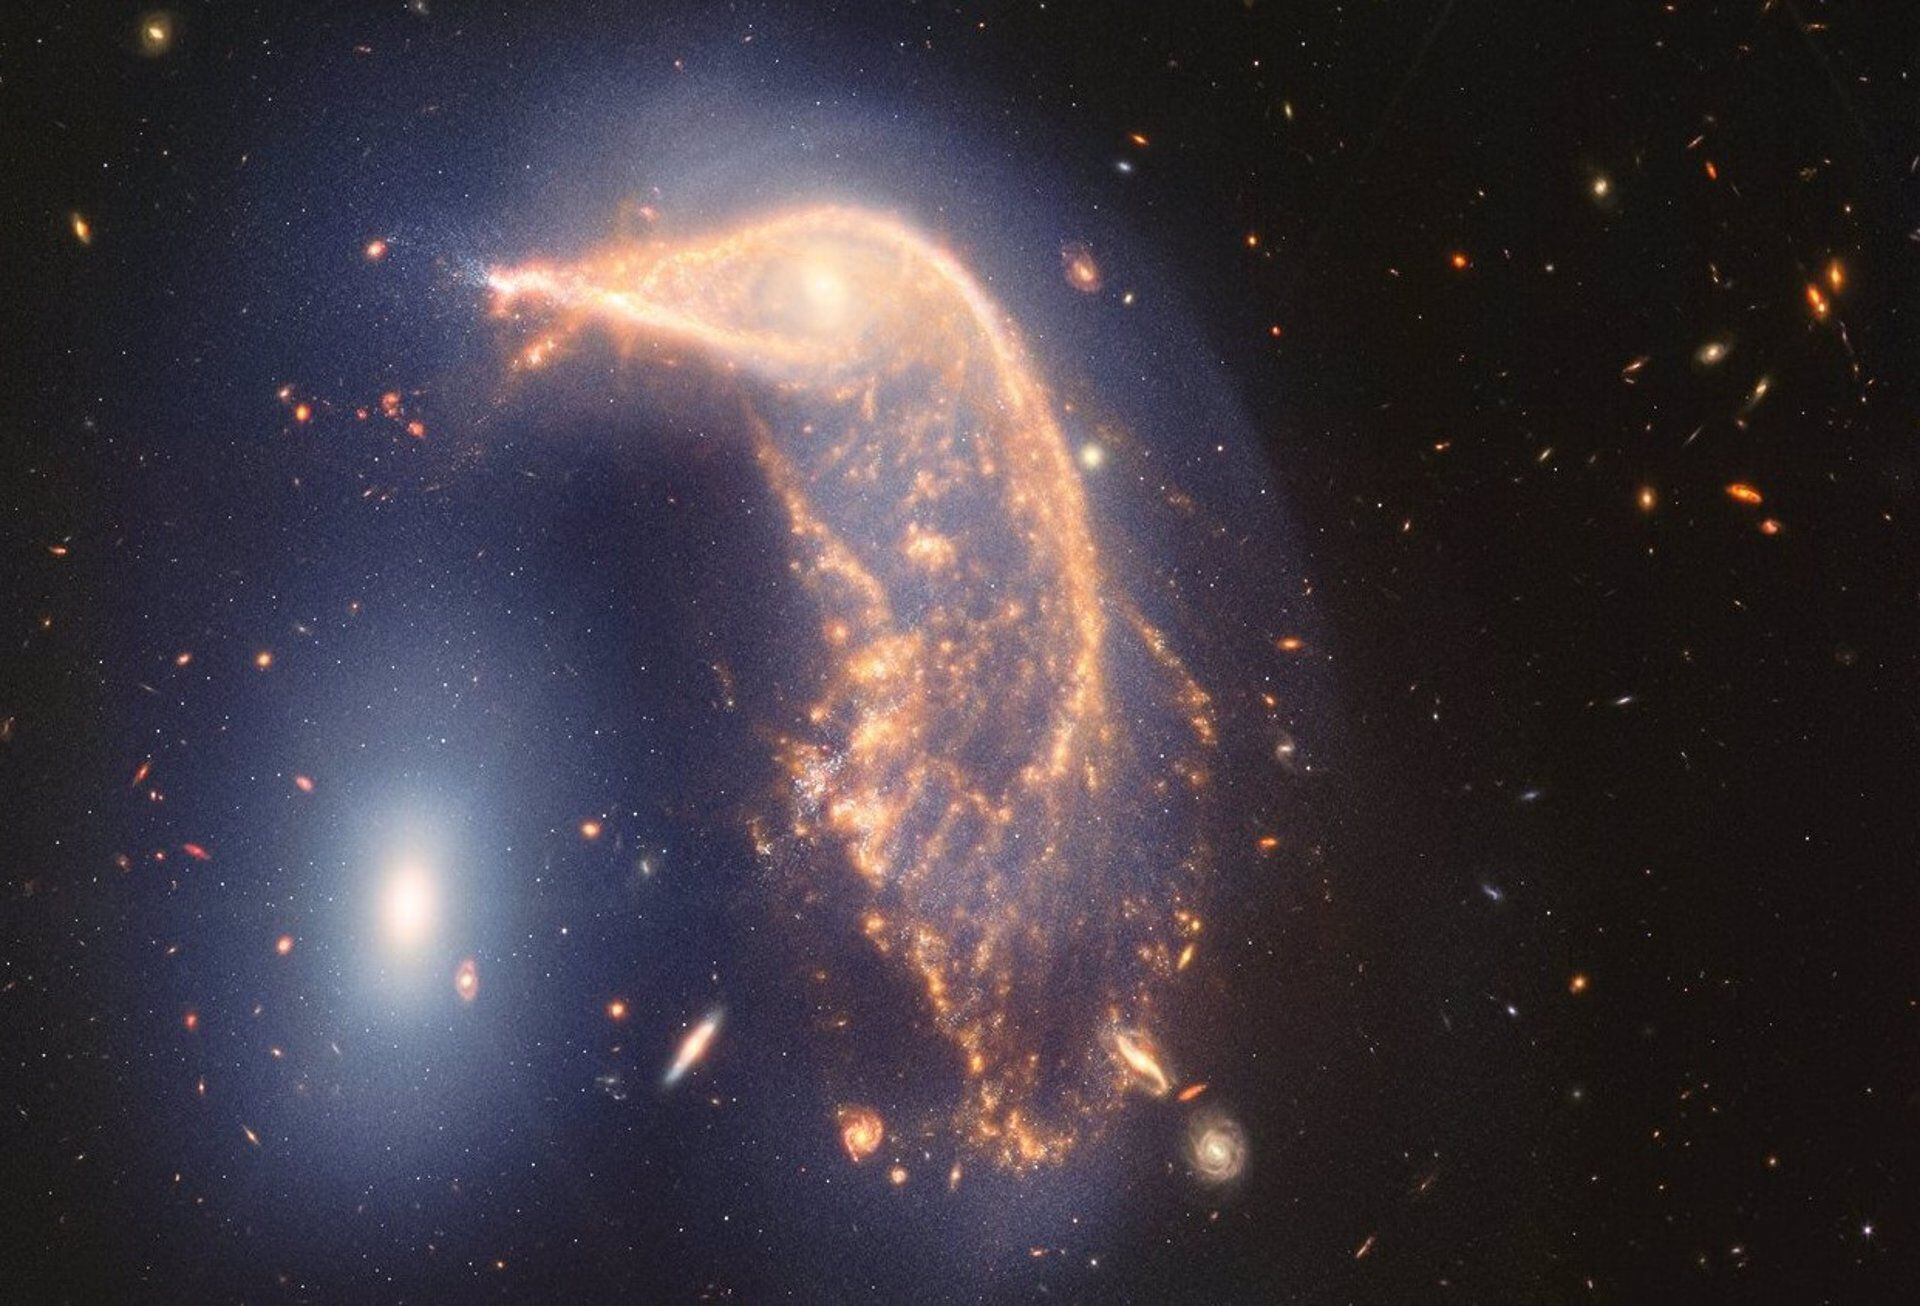 Duo de galaxias en interacción Arp 142.